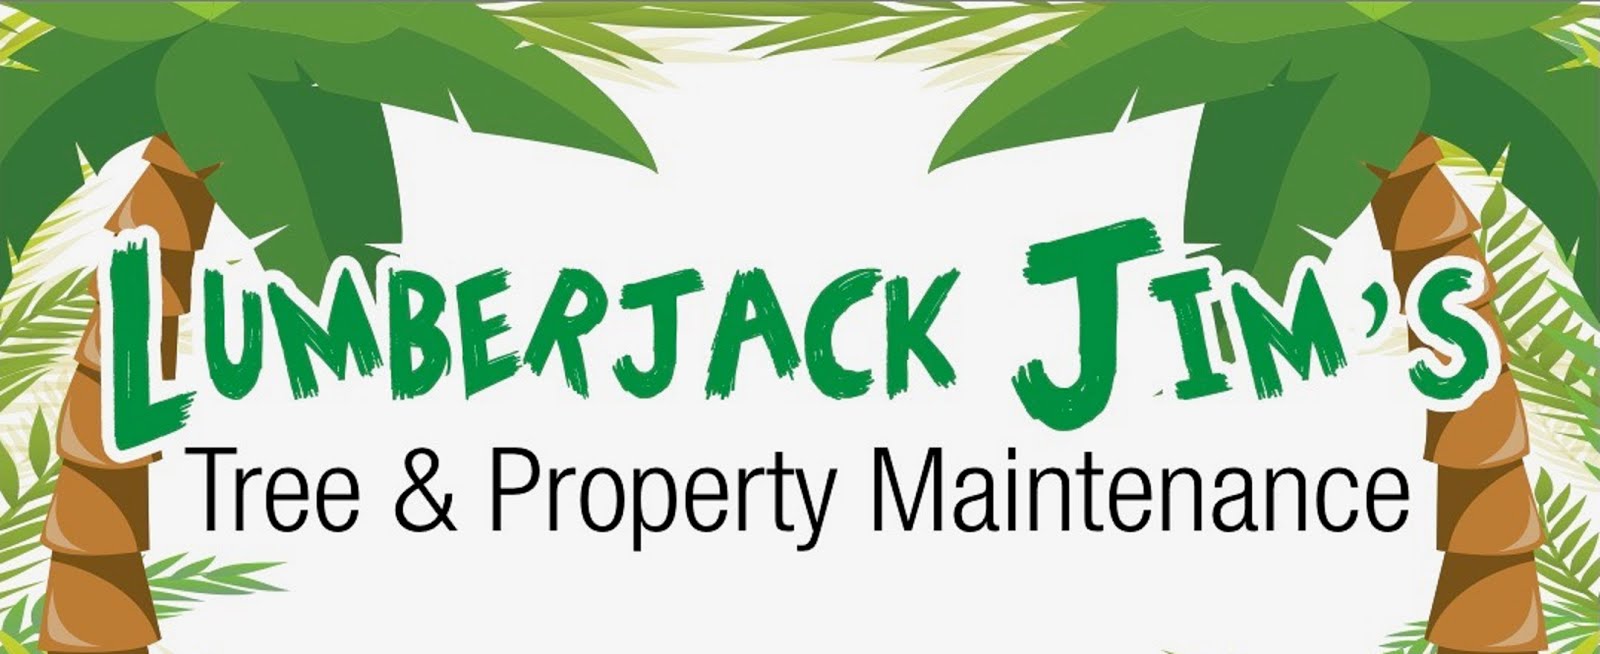 LumberJack Jim's Total Property Maintenance